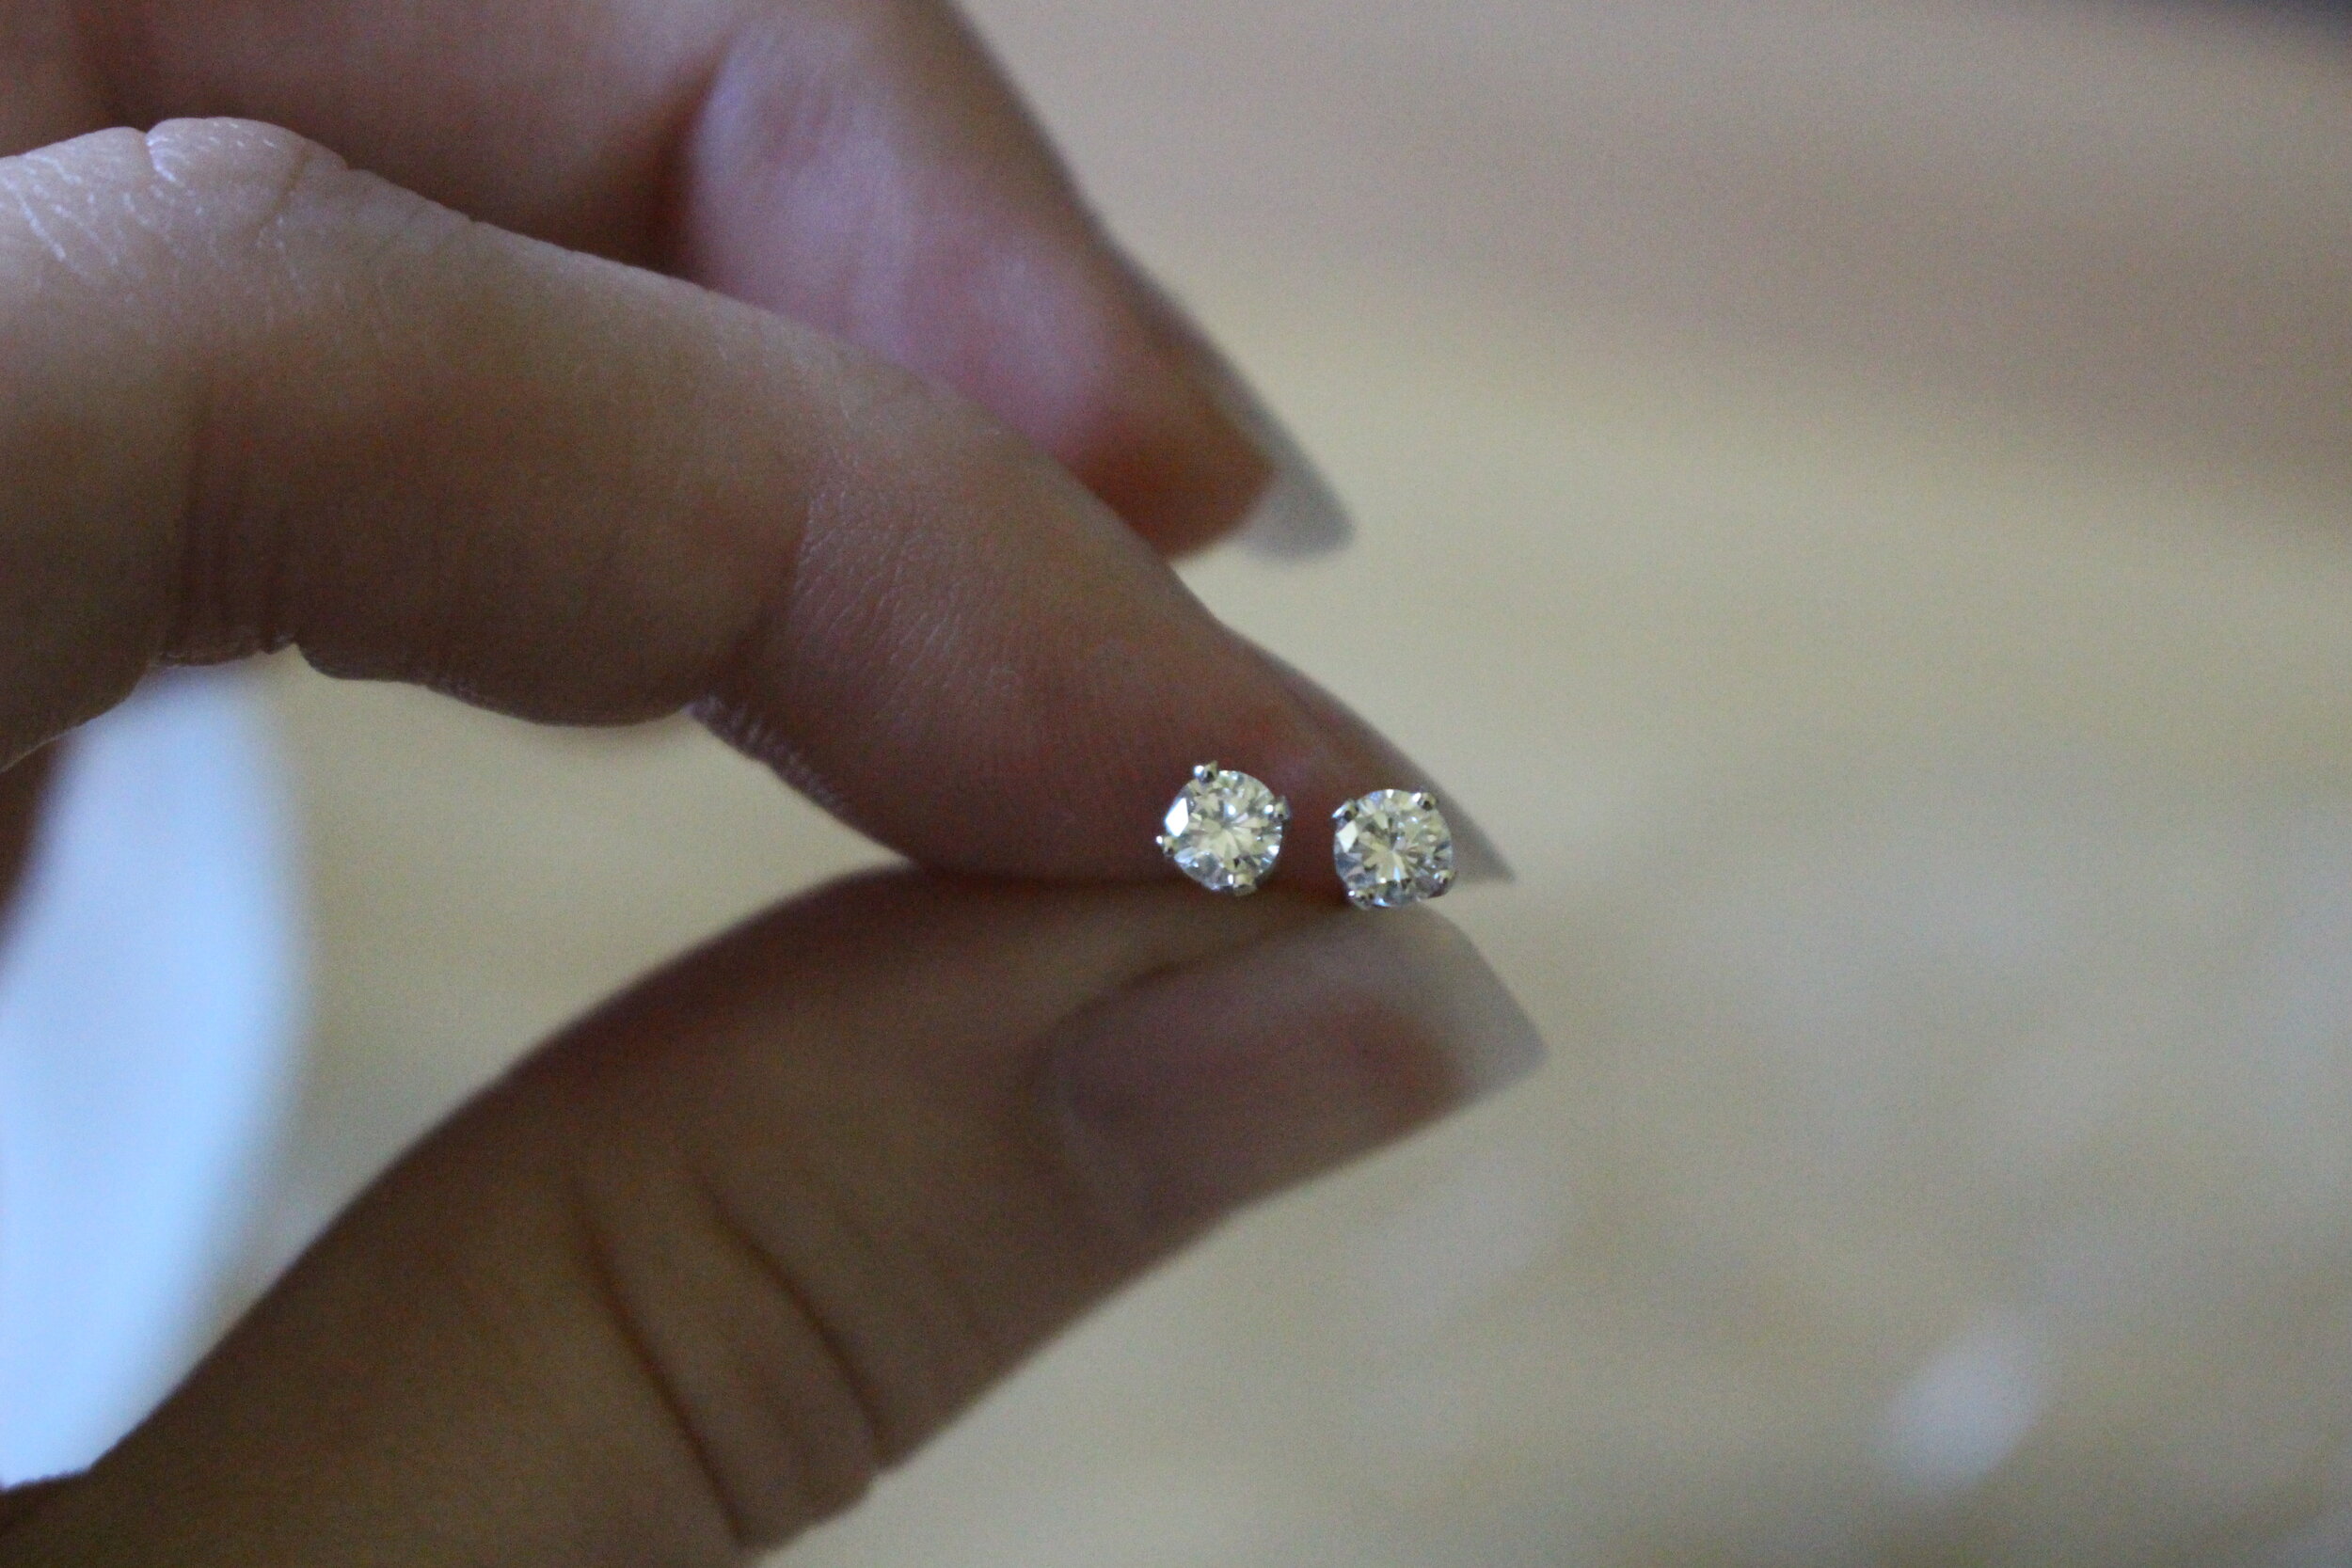 Sparkly clean diamond studs